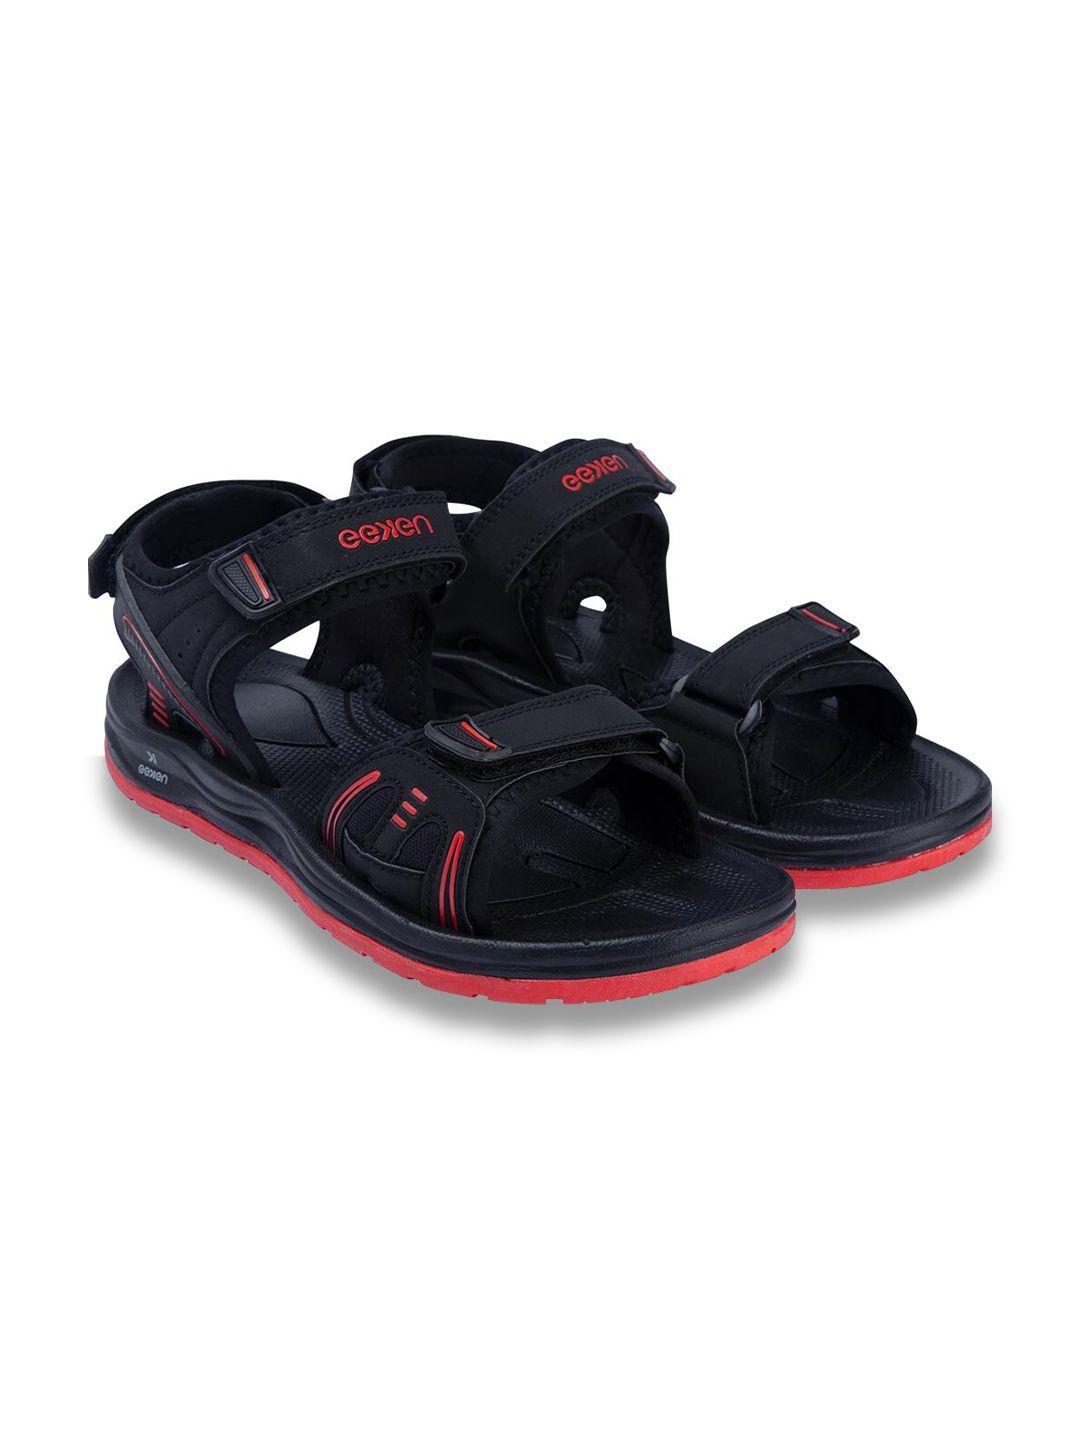 paragon-men-comfort-sports-sandals